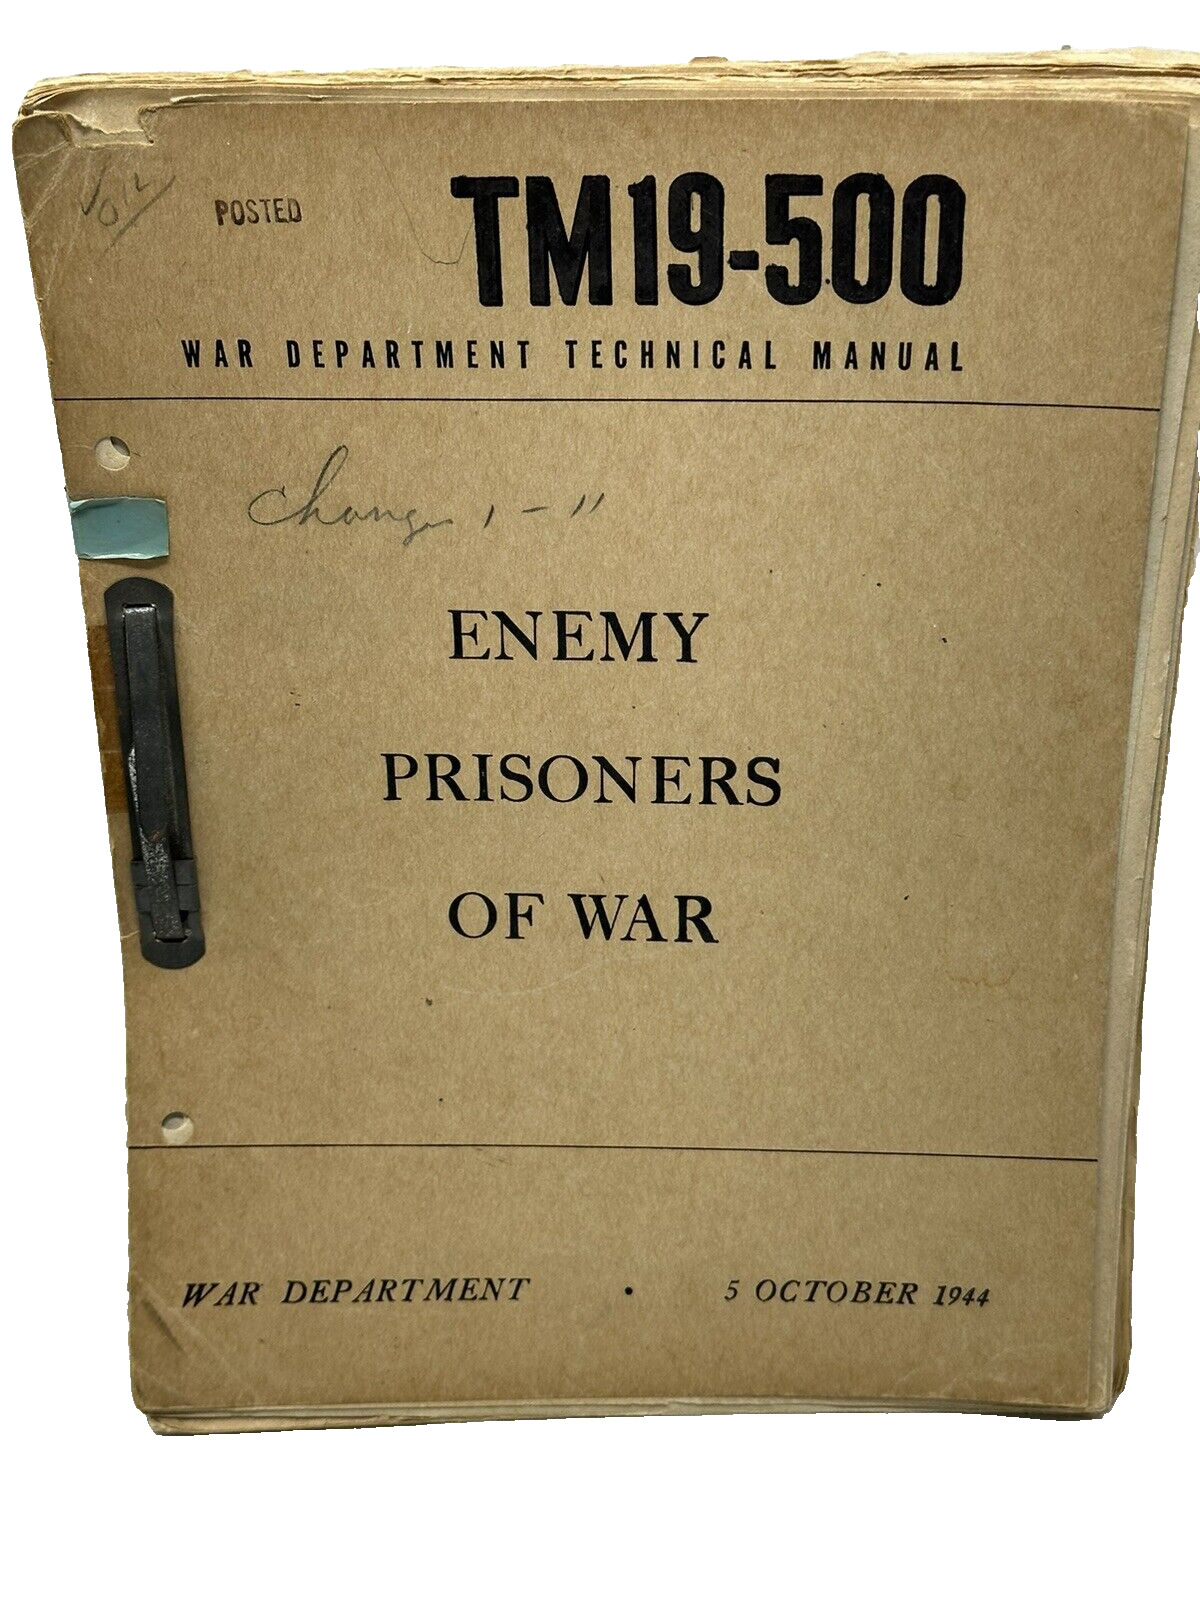 Original US War Department Technical Manual TM 19-500 - 5 October 1944